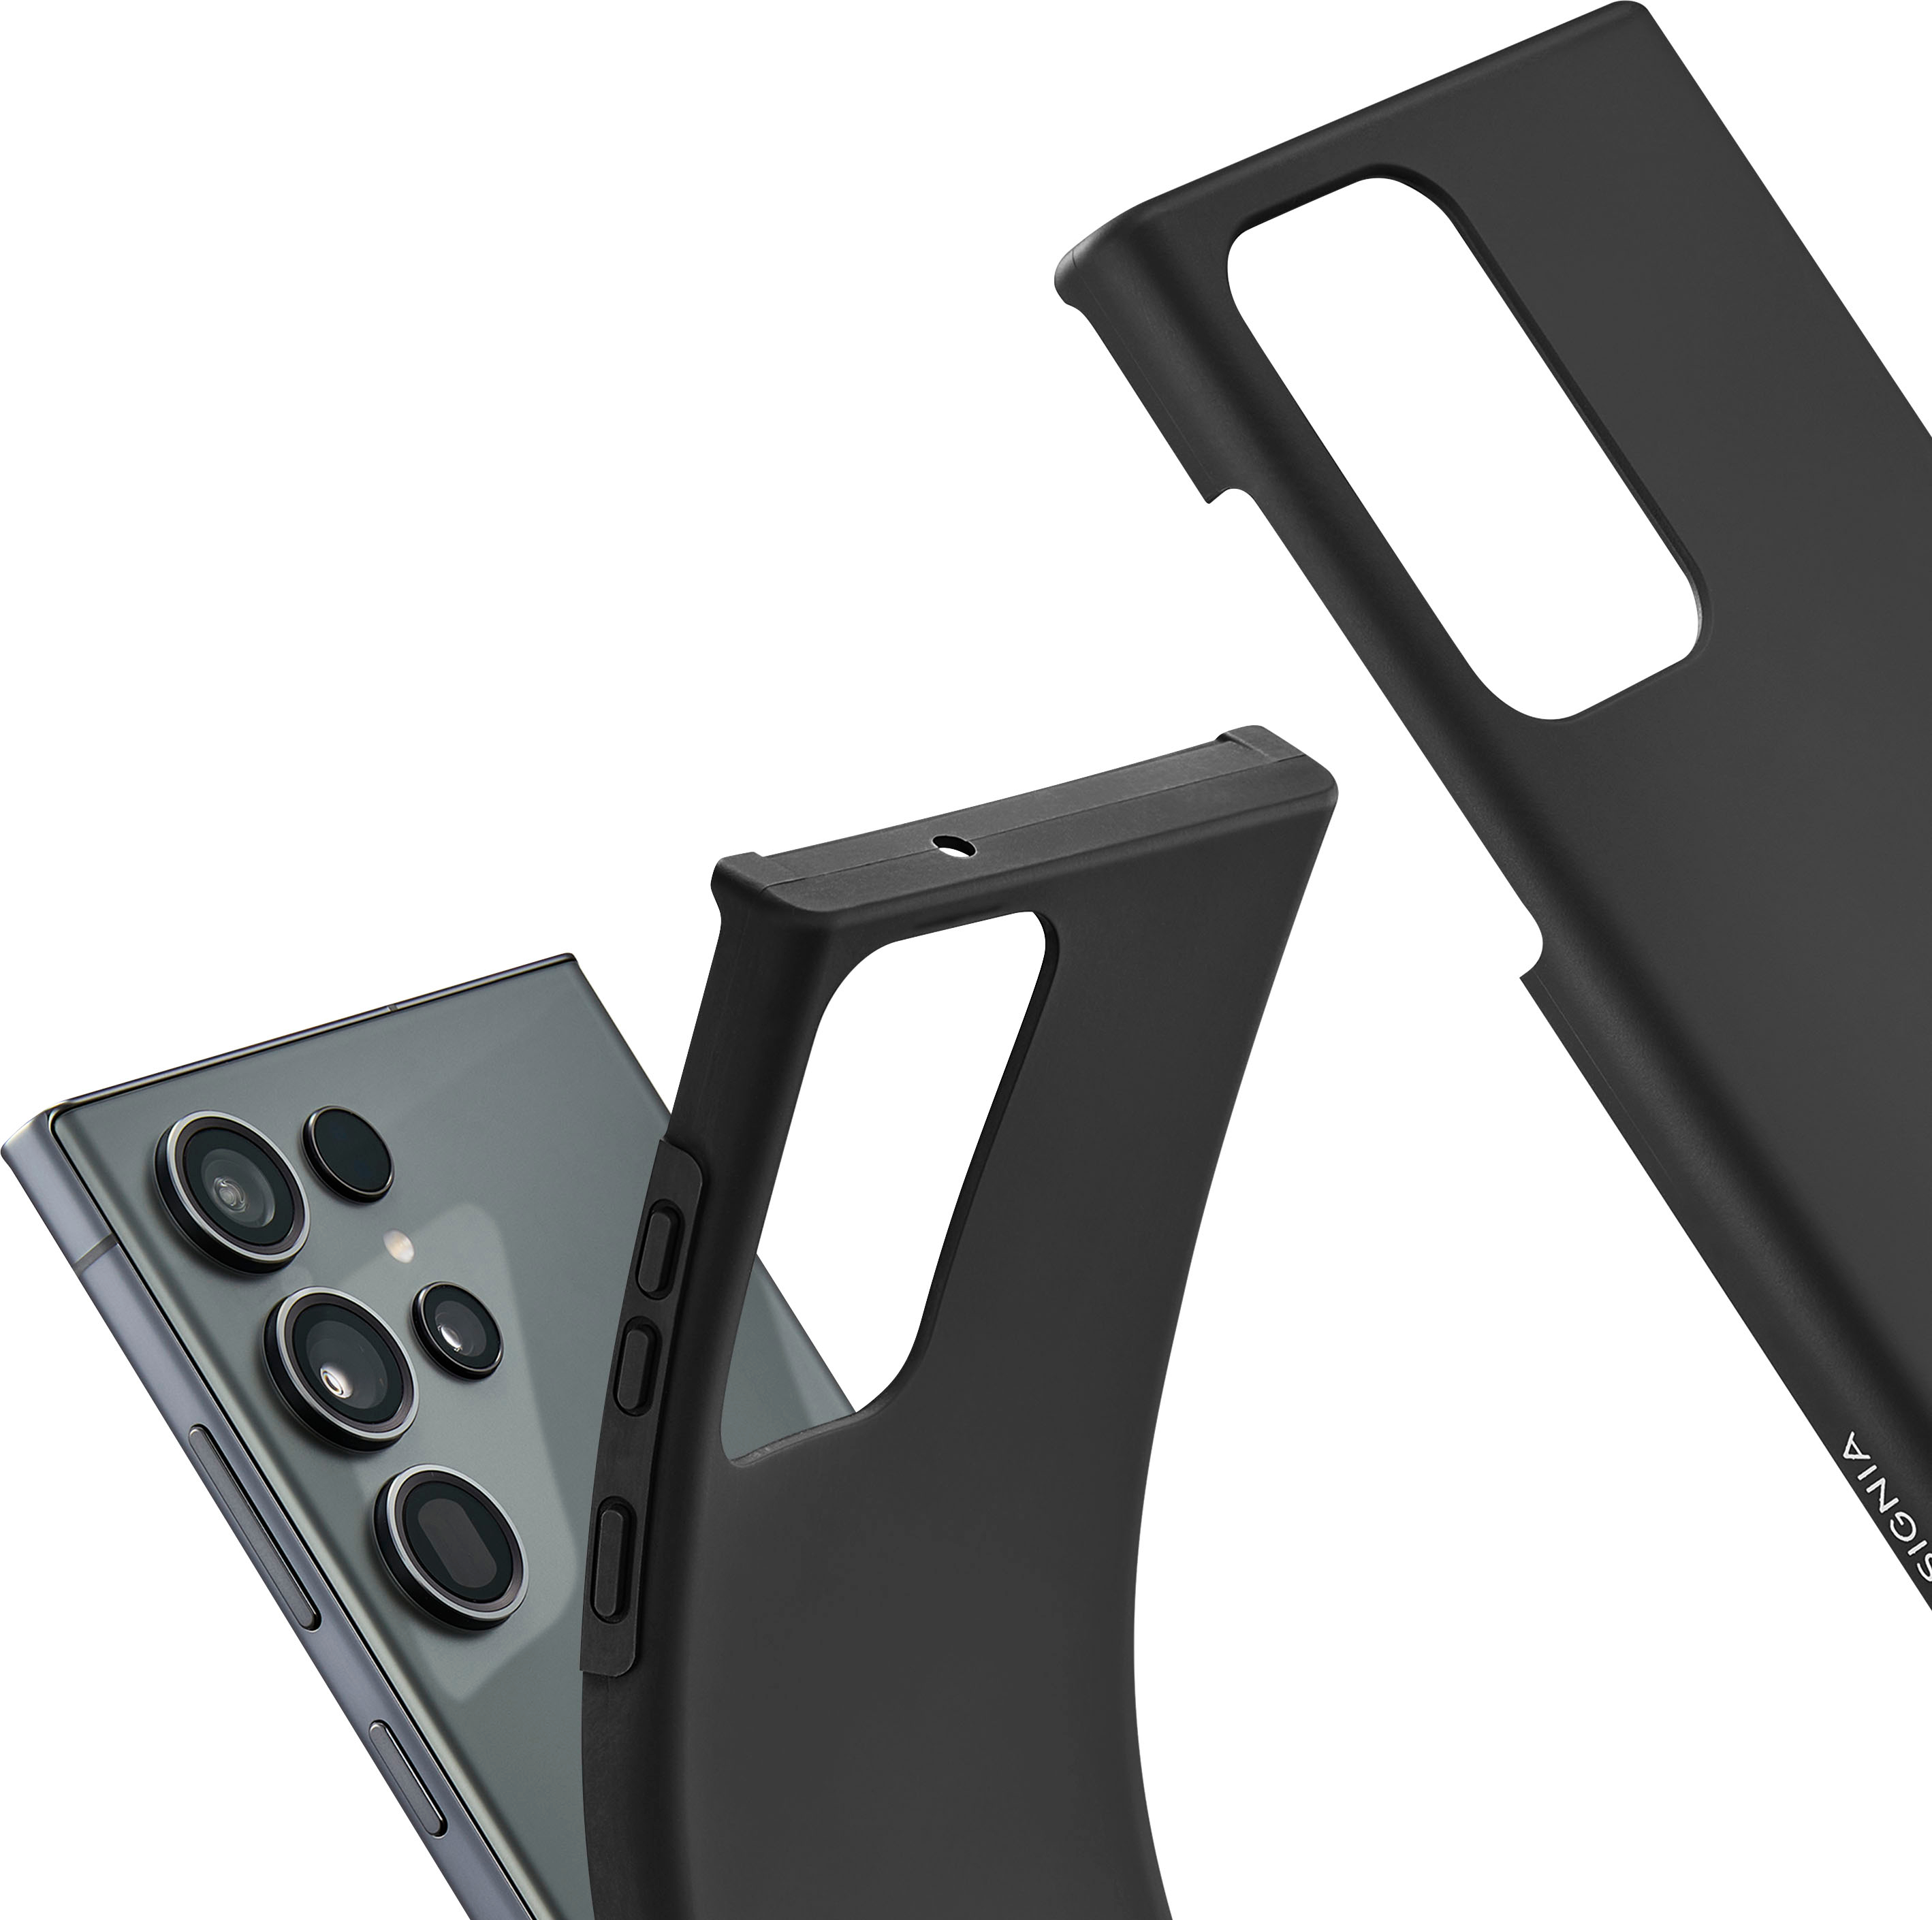 Insignia™ Silicone Bumper Case for Steam Deck & Steam Deck OLED Black  NS-SDBC - Best Buy